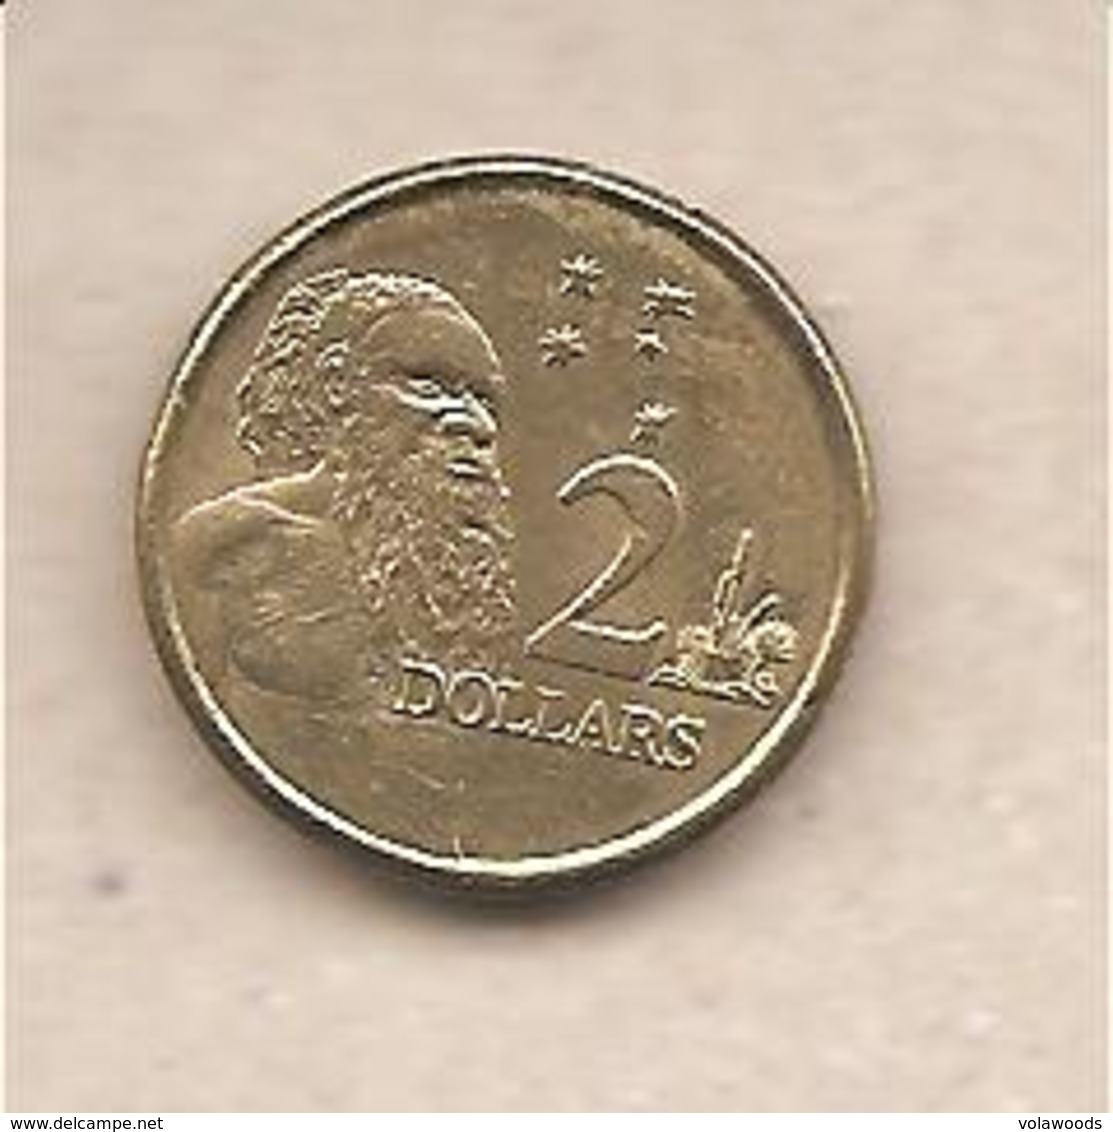 Australia - Moneta Circolata Da 2 Dollari - 2018 - 2 Dollars